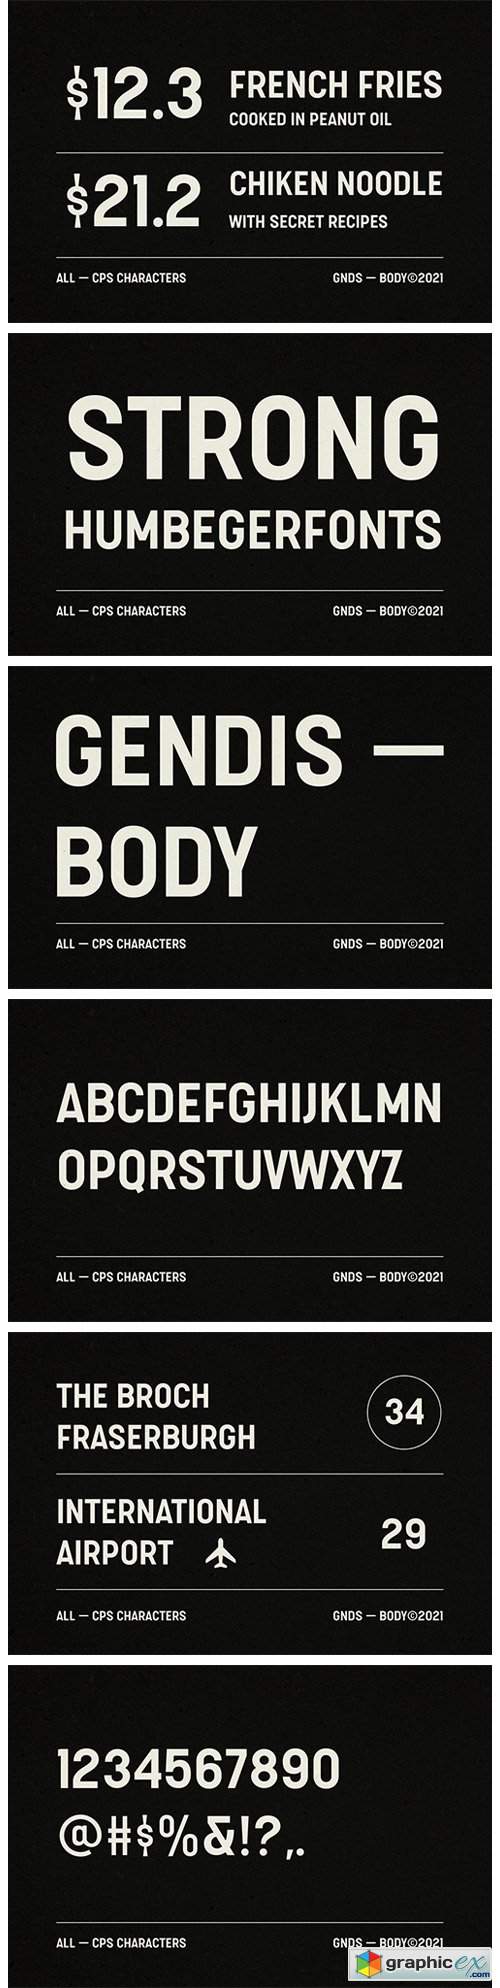  Gendis Body Font 